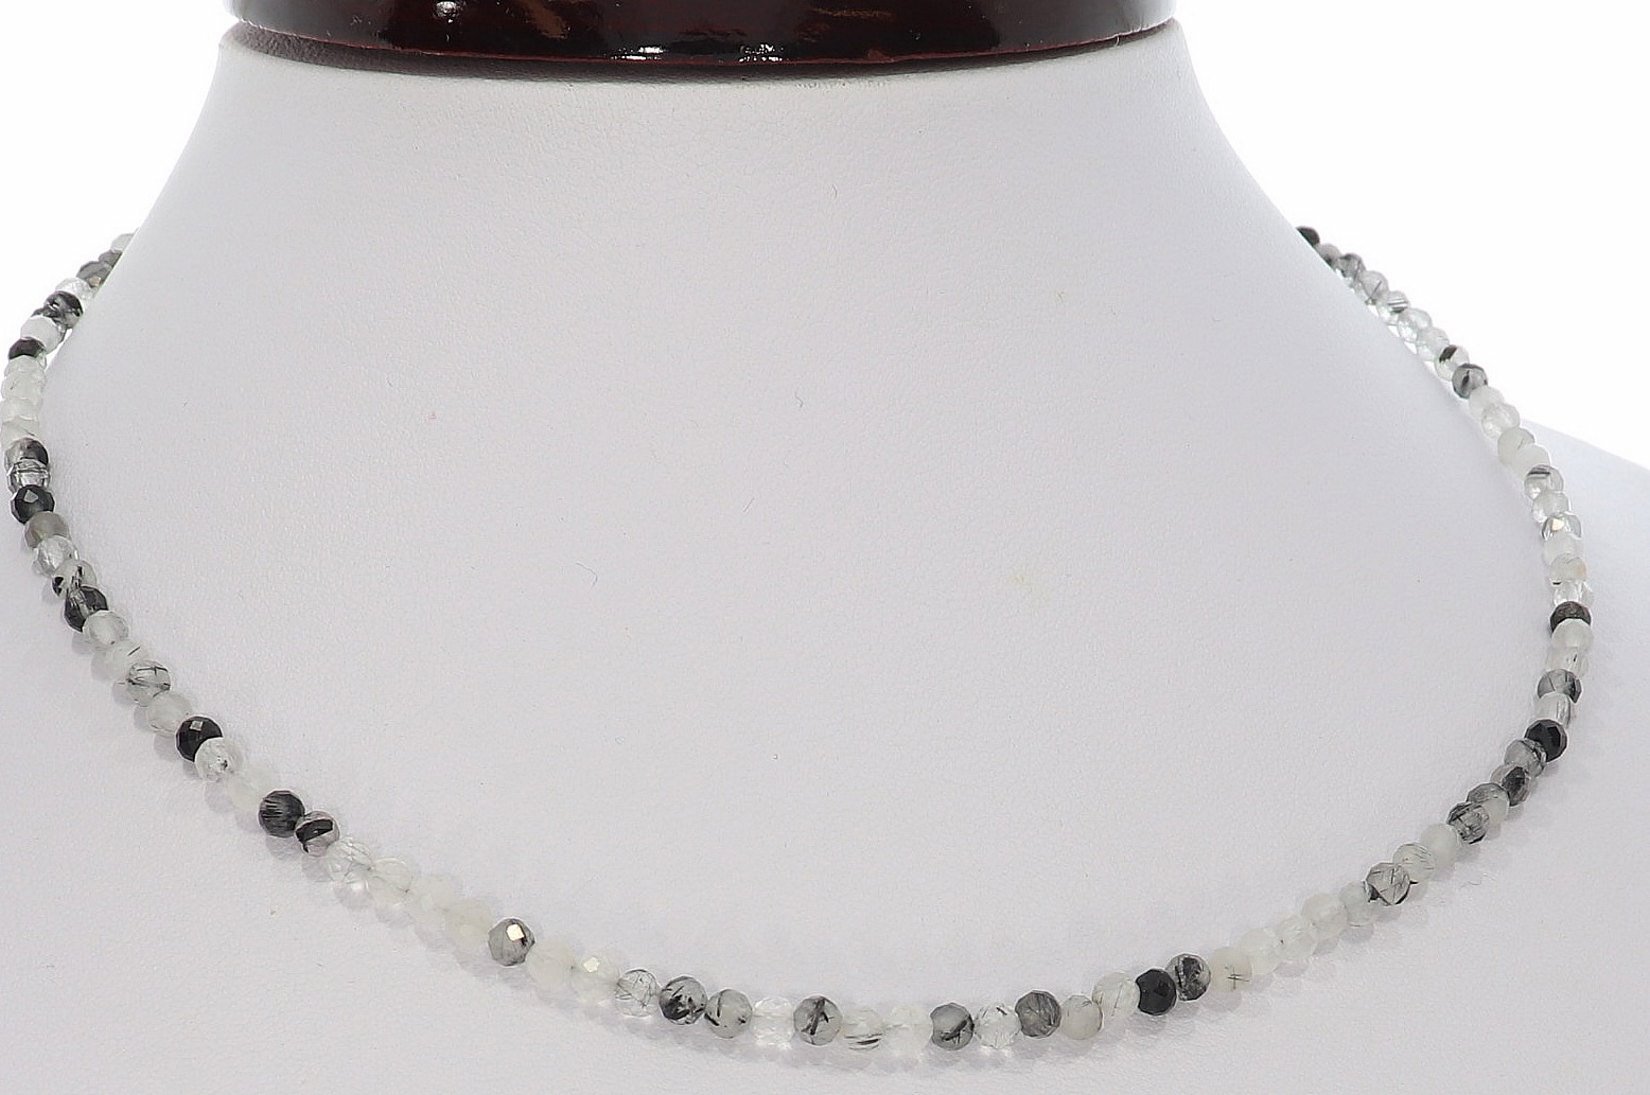 Turmalinquarz Kugel Halskette facettiert Silber farben 3mm - 40-45cm Kettenverlängerer KK316